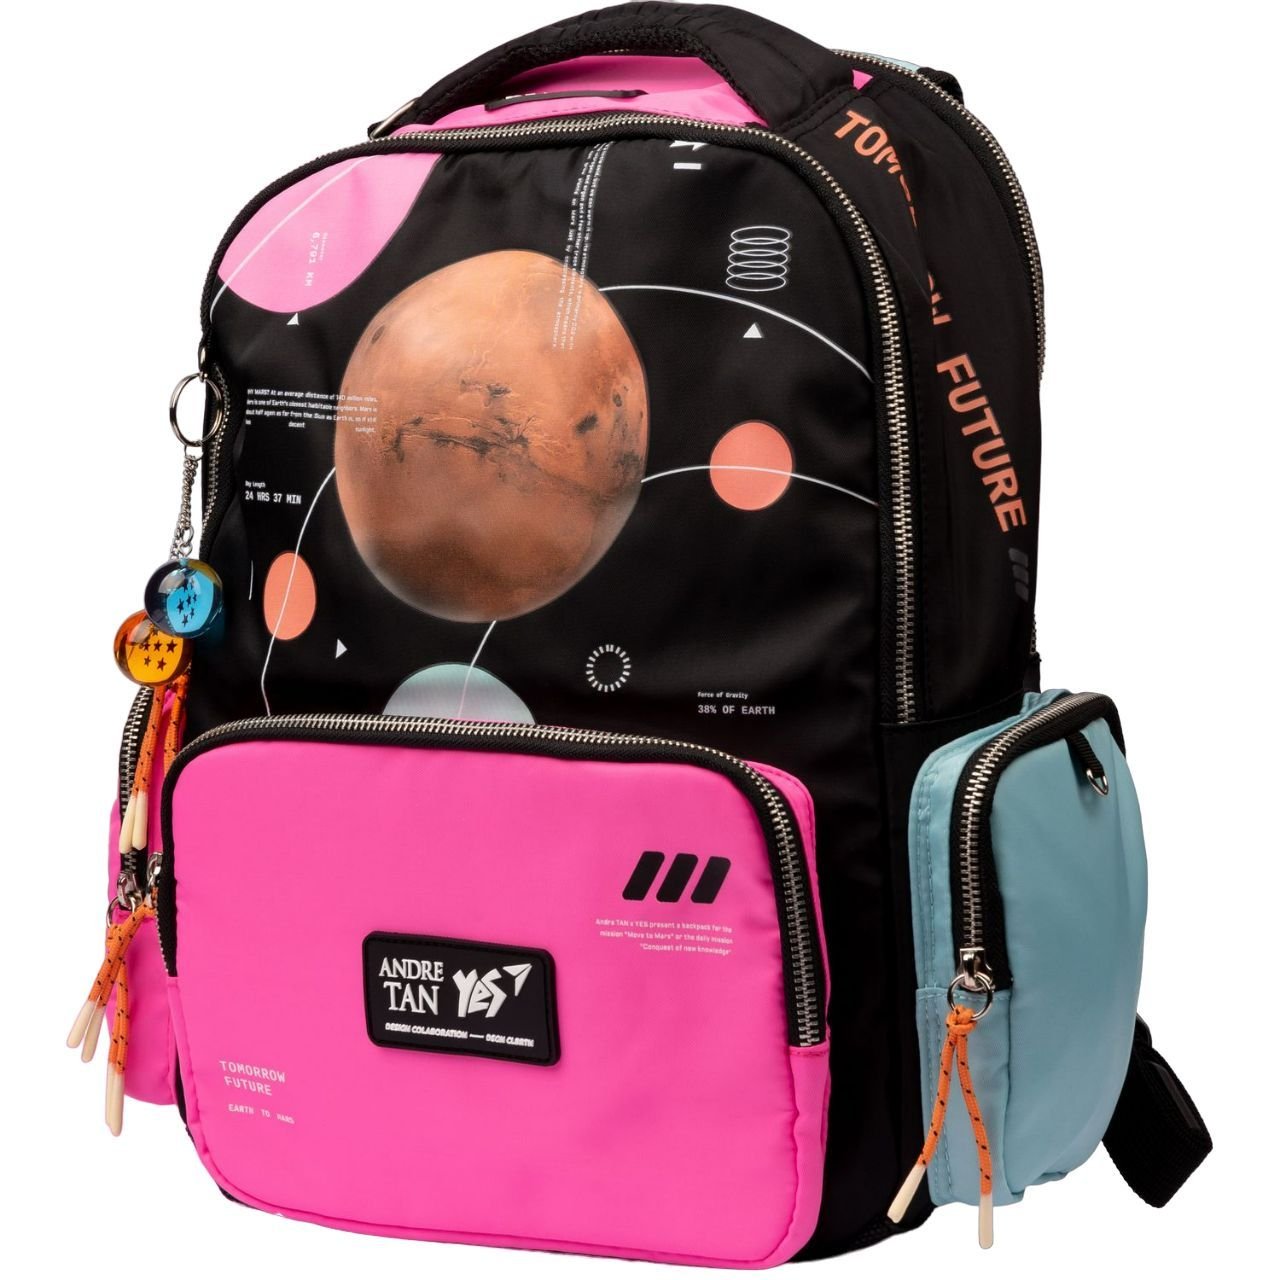 Рюкзак Yes TS-93 Andre Tan Space Pink, чорний з рожевим (559036) - фото 1